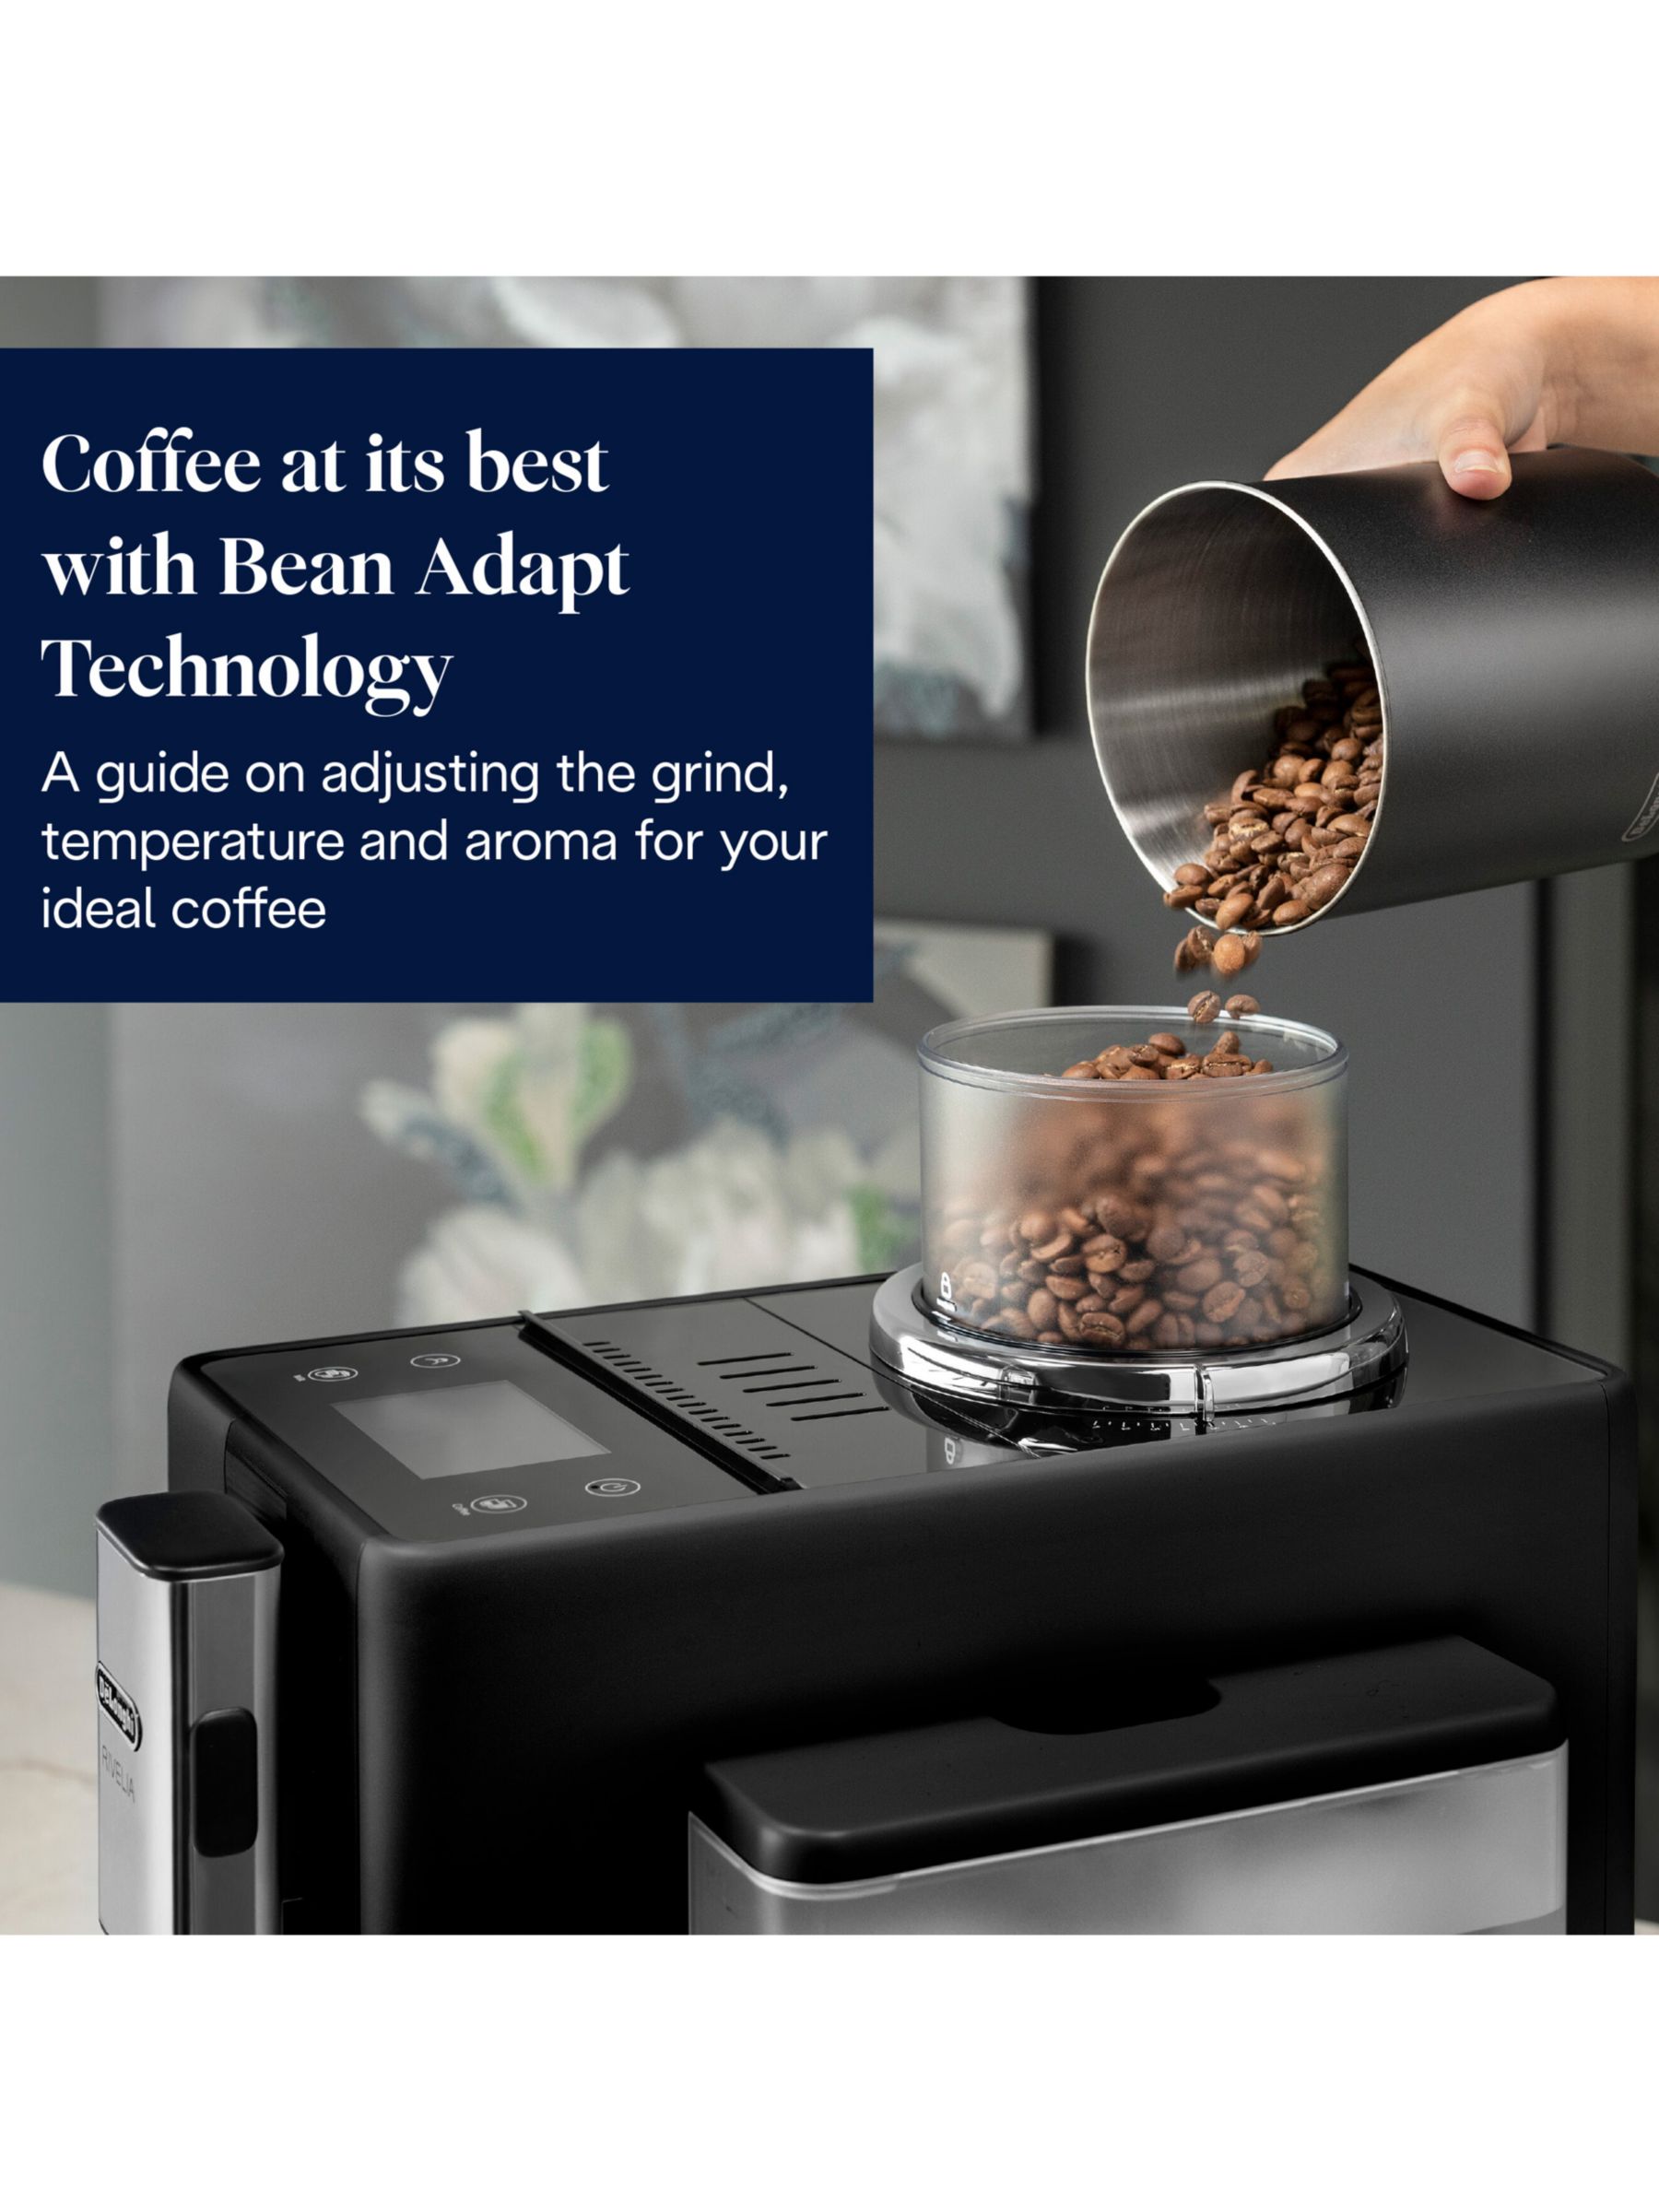 Buy De'Longhi Rivelia Bean to Cup Coffee Machine - Black